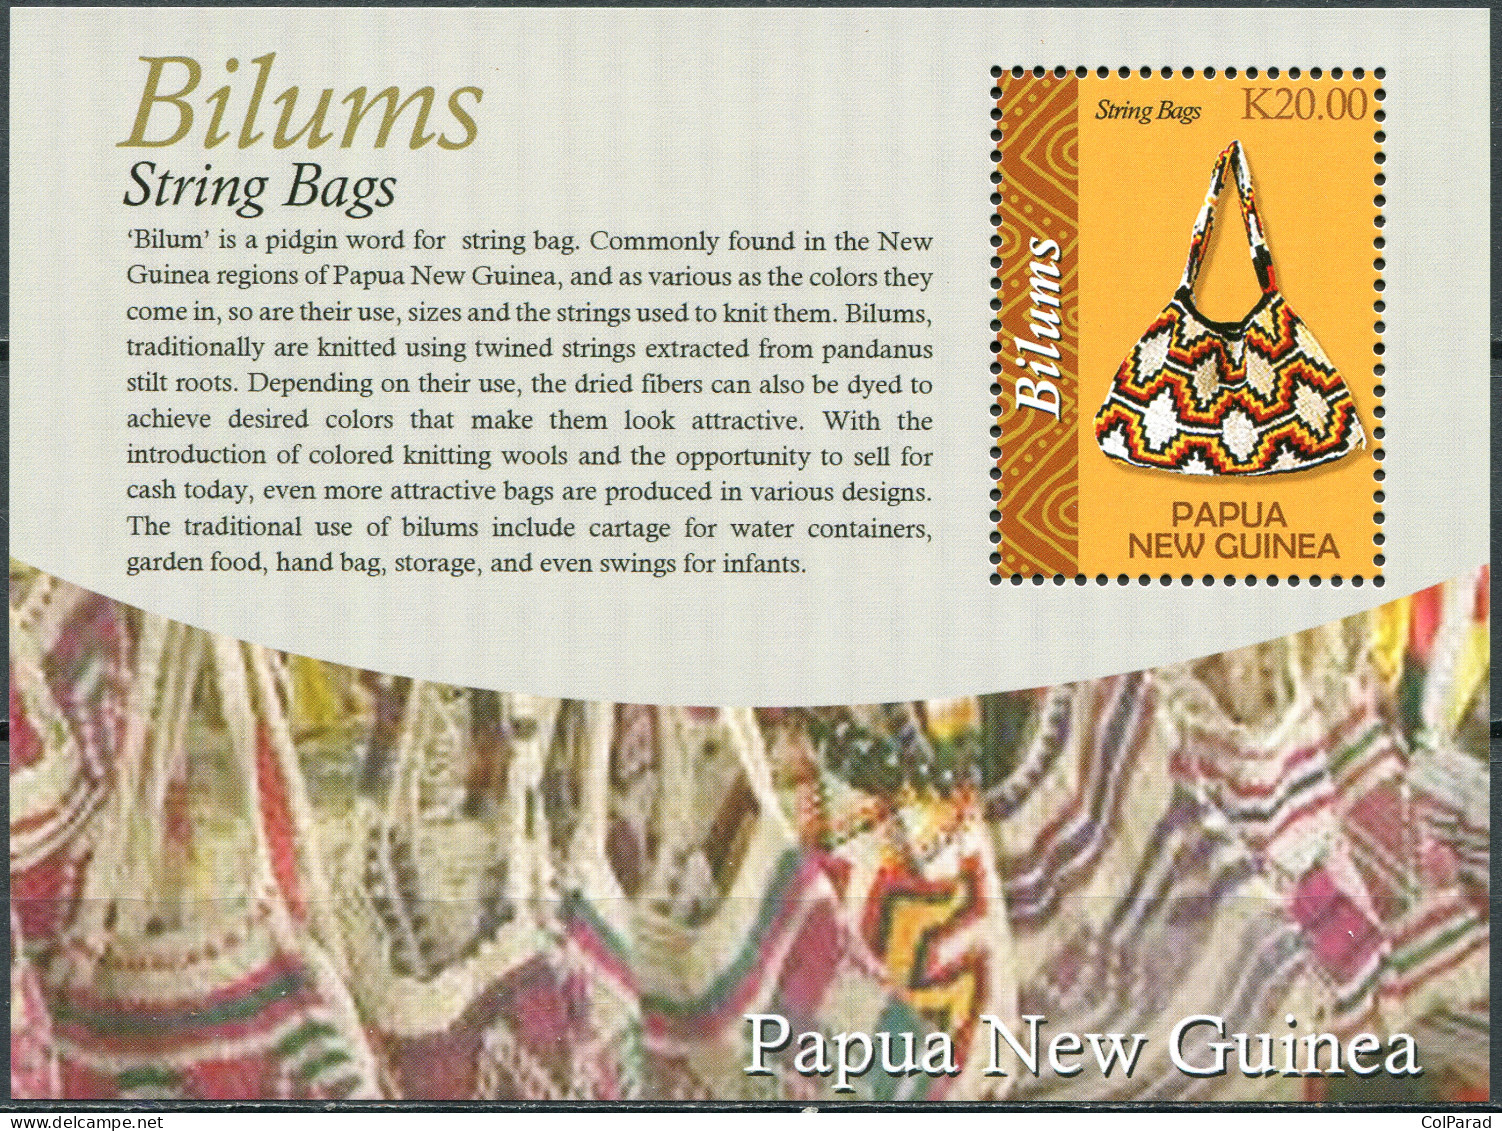 PAPUA NEW GUINEA - 2020 - SOUVENIR SHEET MNH ** - Bilums - Papua New Guinea